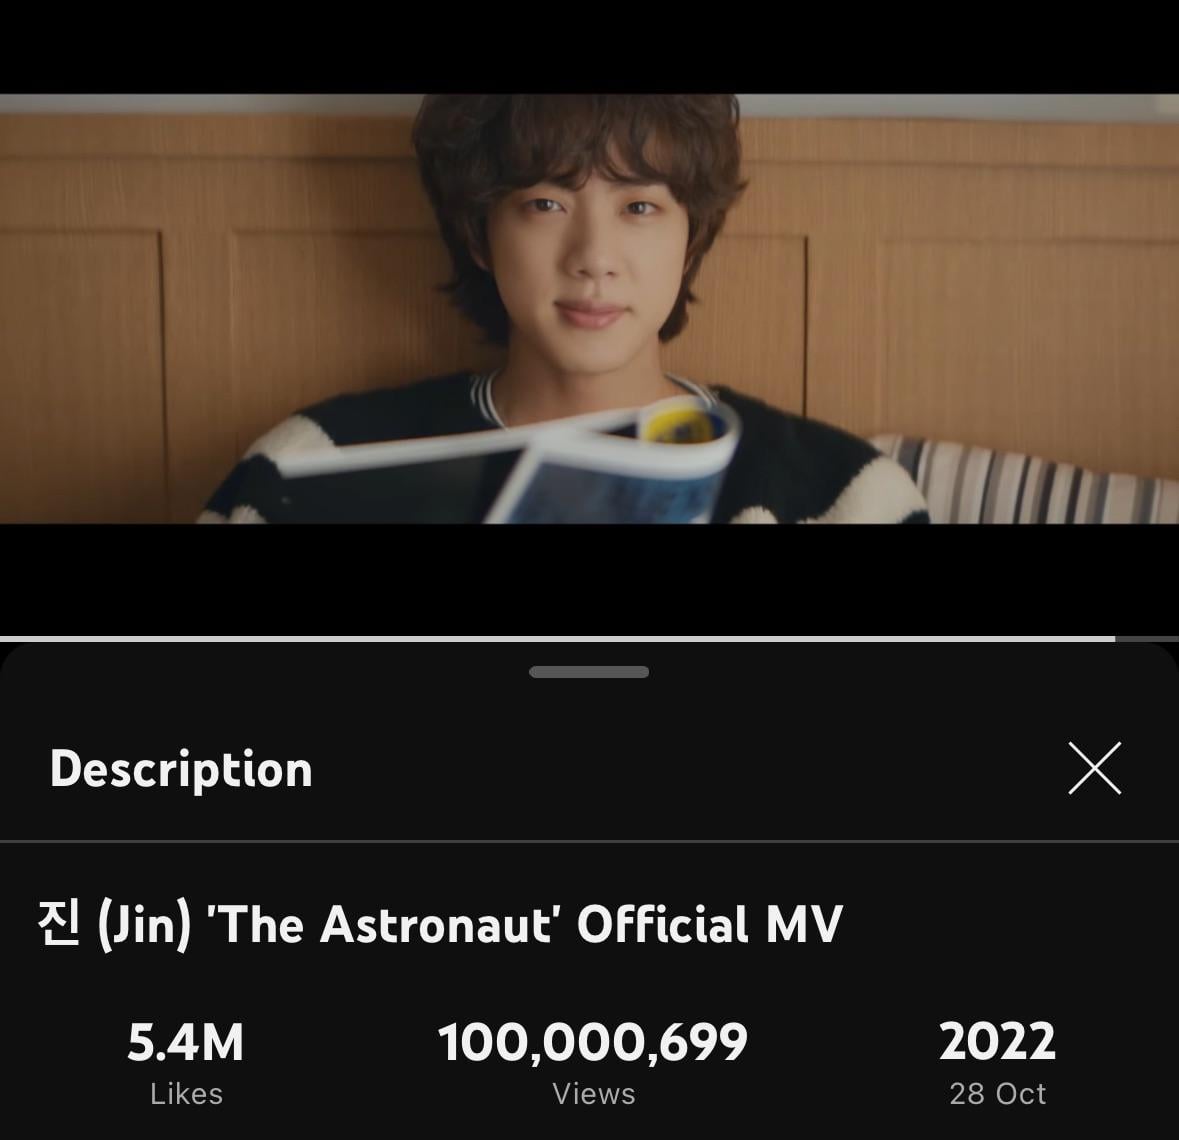 Jin’s “The Astronaut” has surpassed 100 million views on YouTube! - 041223